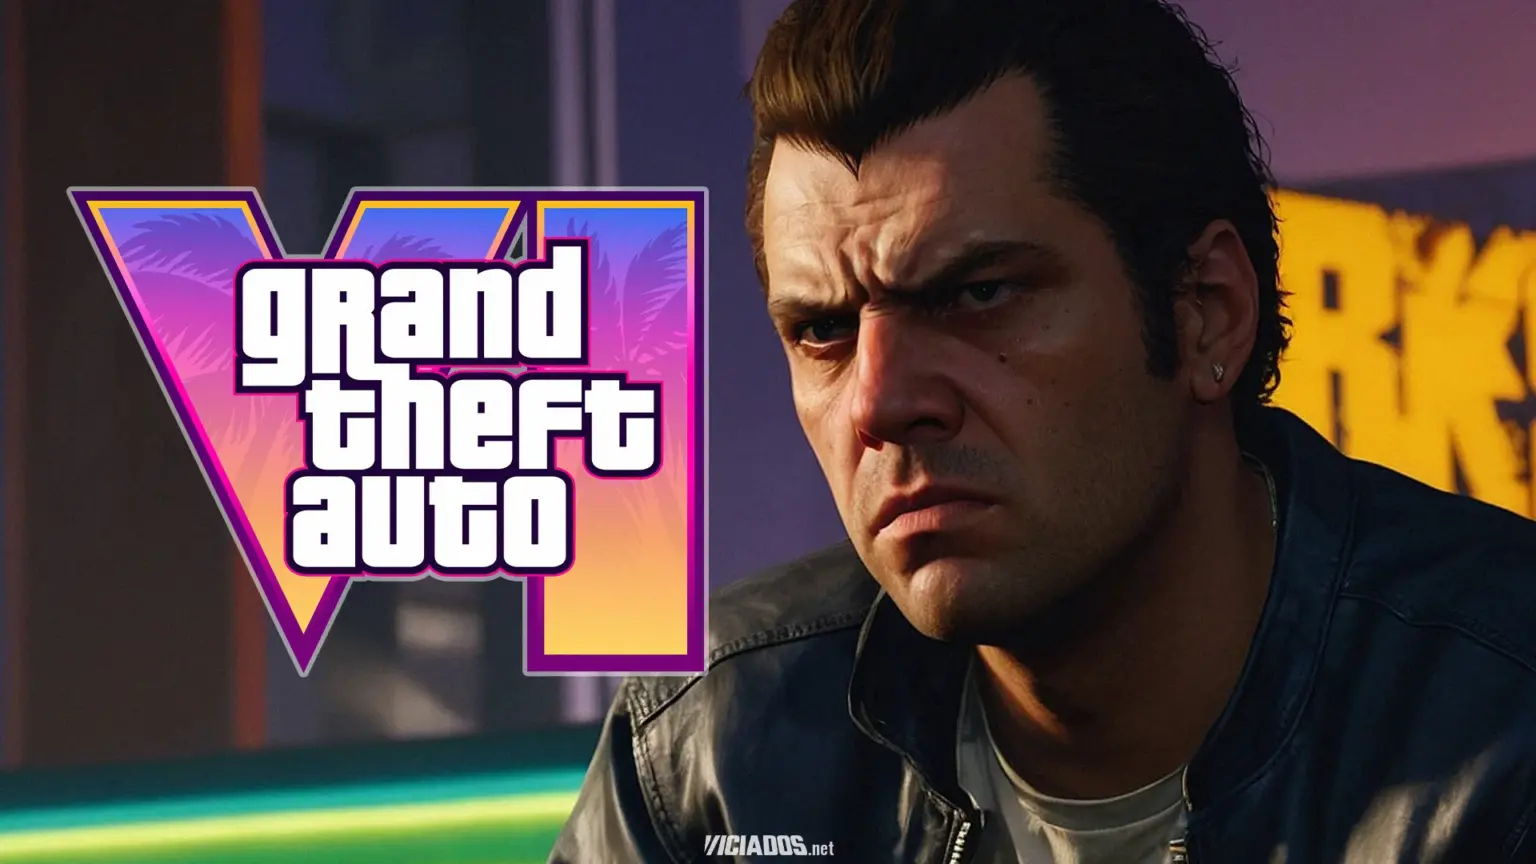 GTA 6 | Rockstar Games divide fãs com este recurso controverso 2024 Portal Viciados